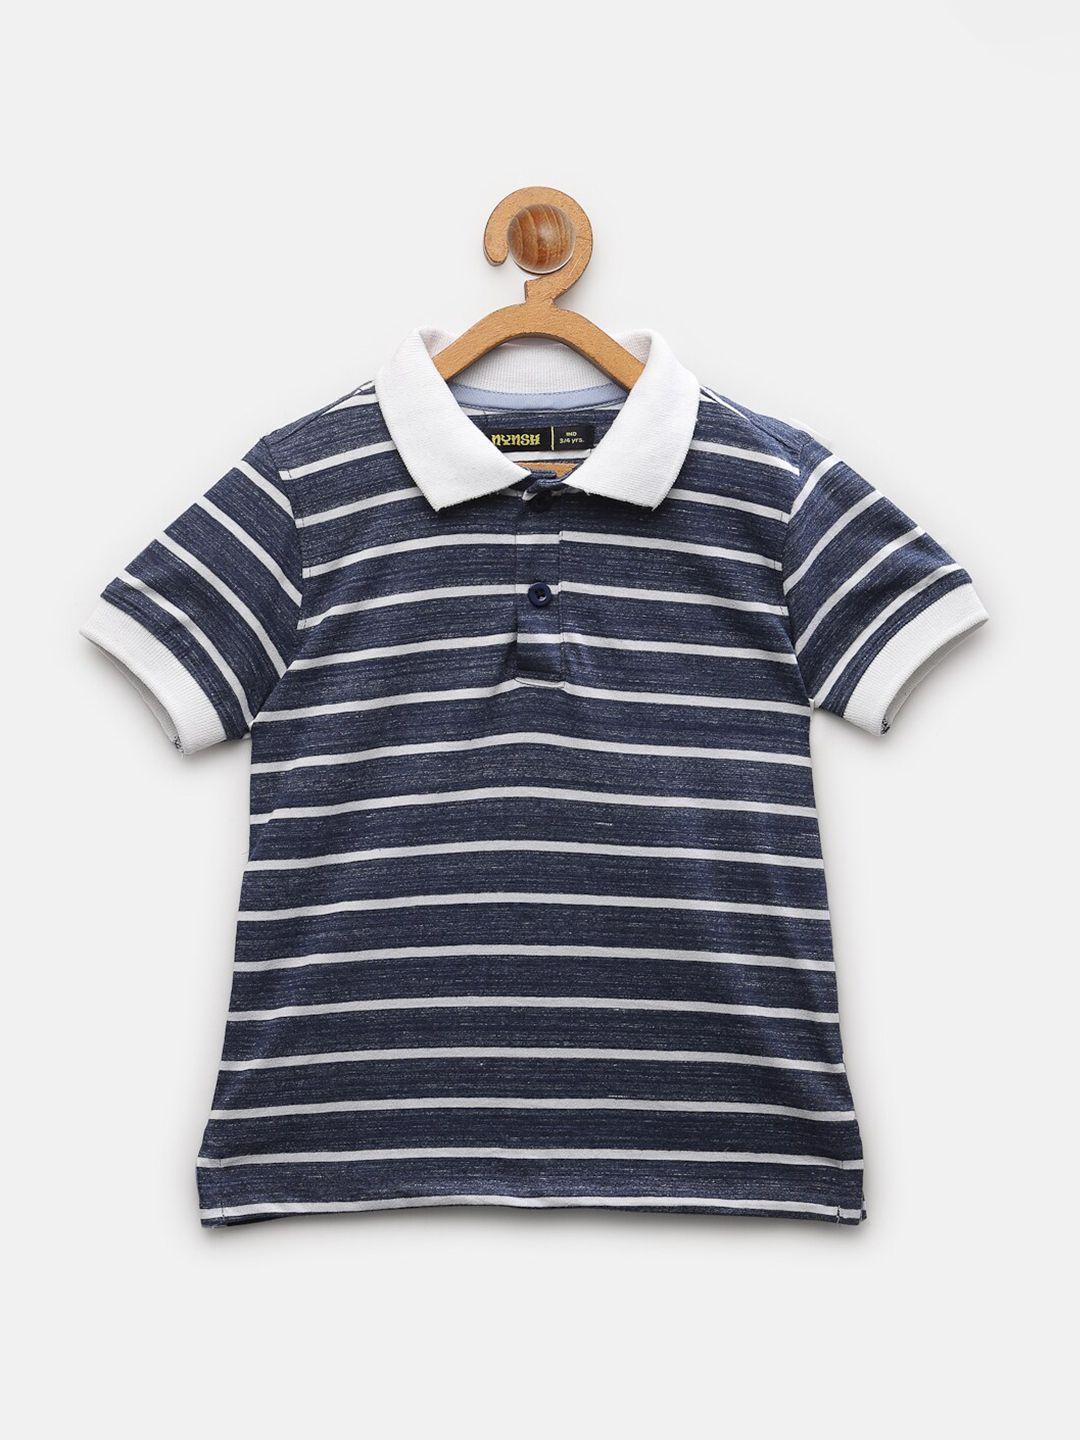 nynsh- pluss kids boys navy blue striped polo collar t-shirt